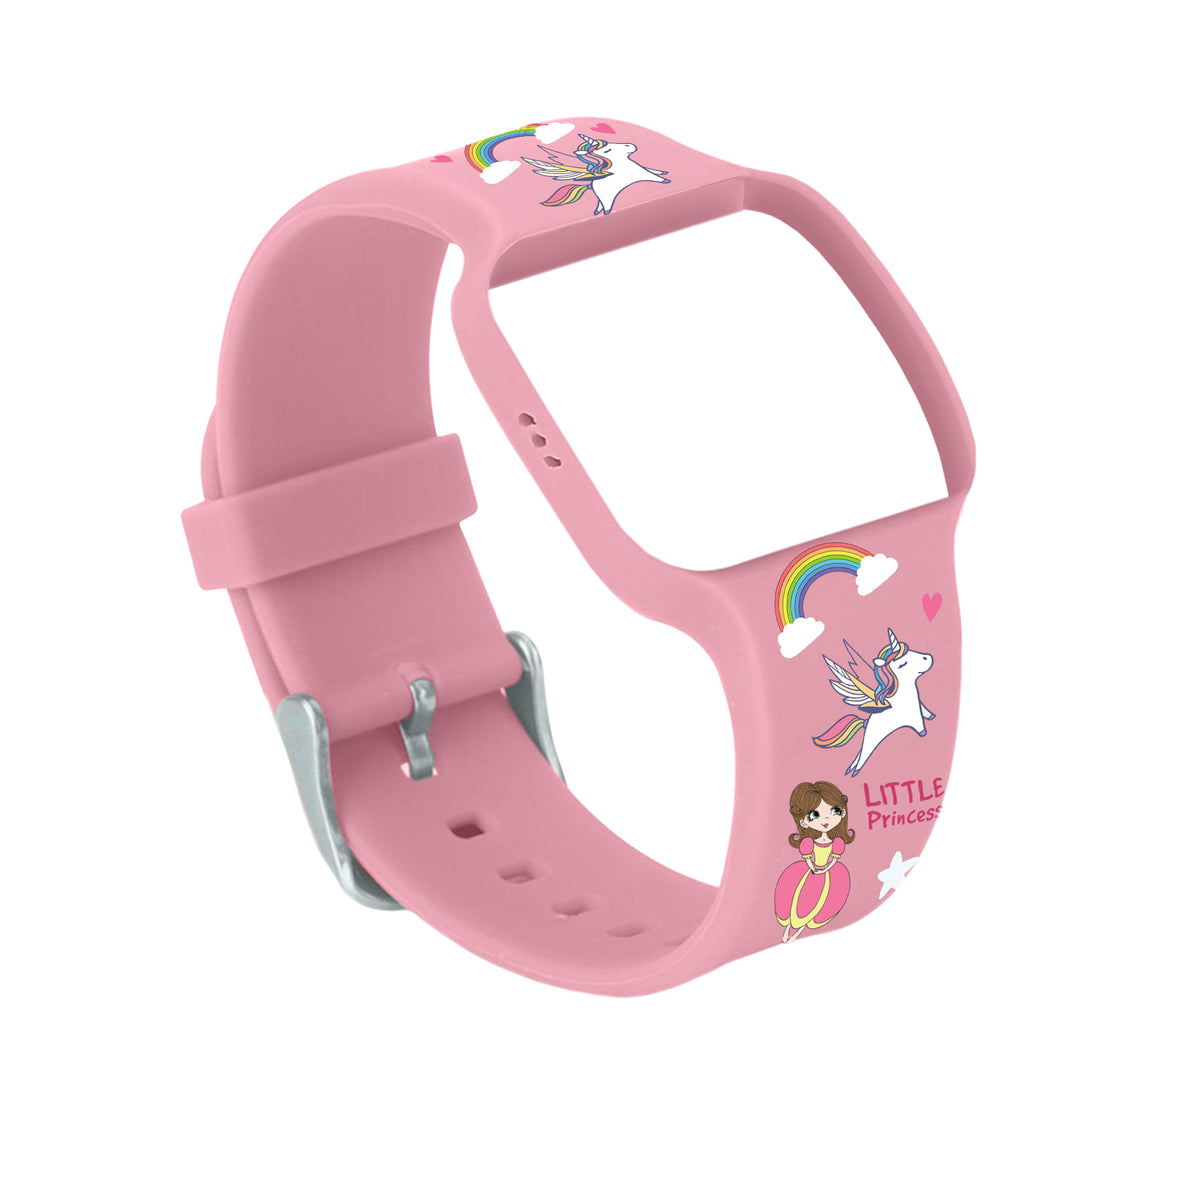 Princess Pink Watch Band for Athena Futures Potty Training Watch - Athena Futures Inc.